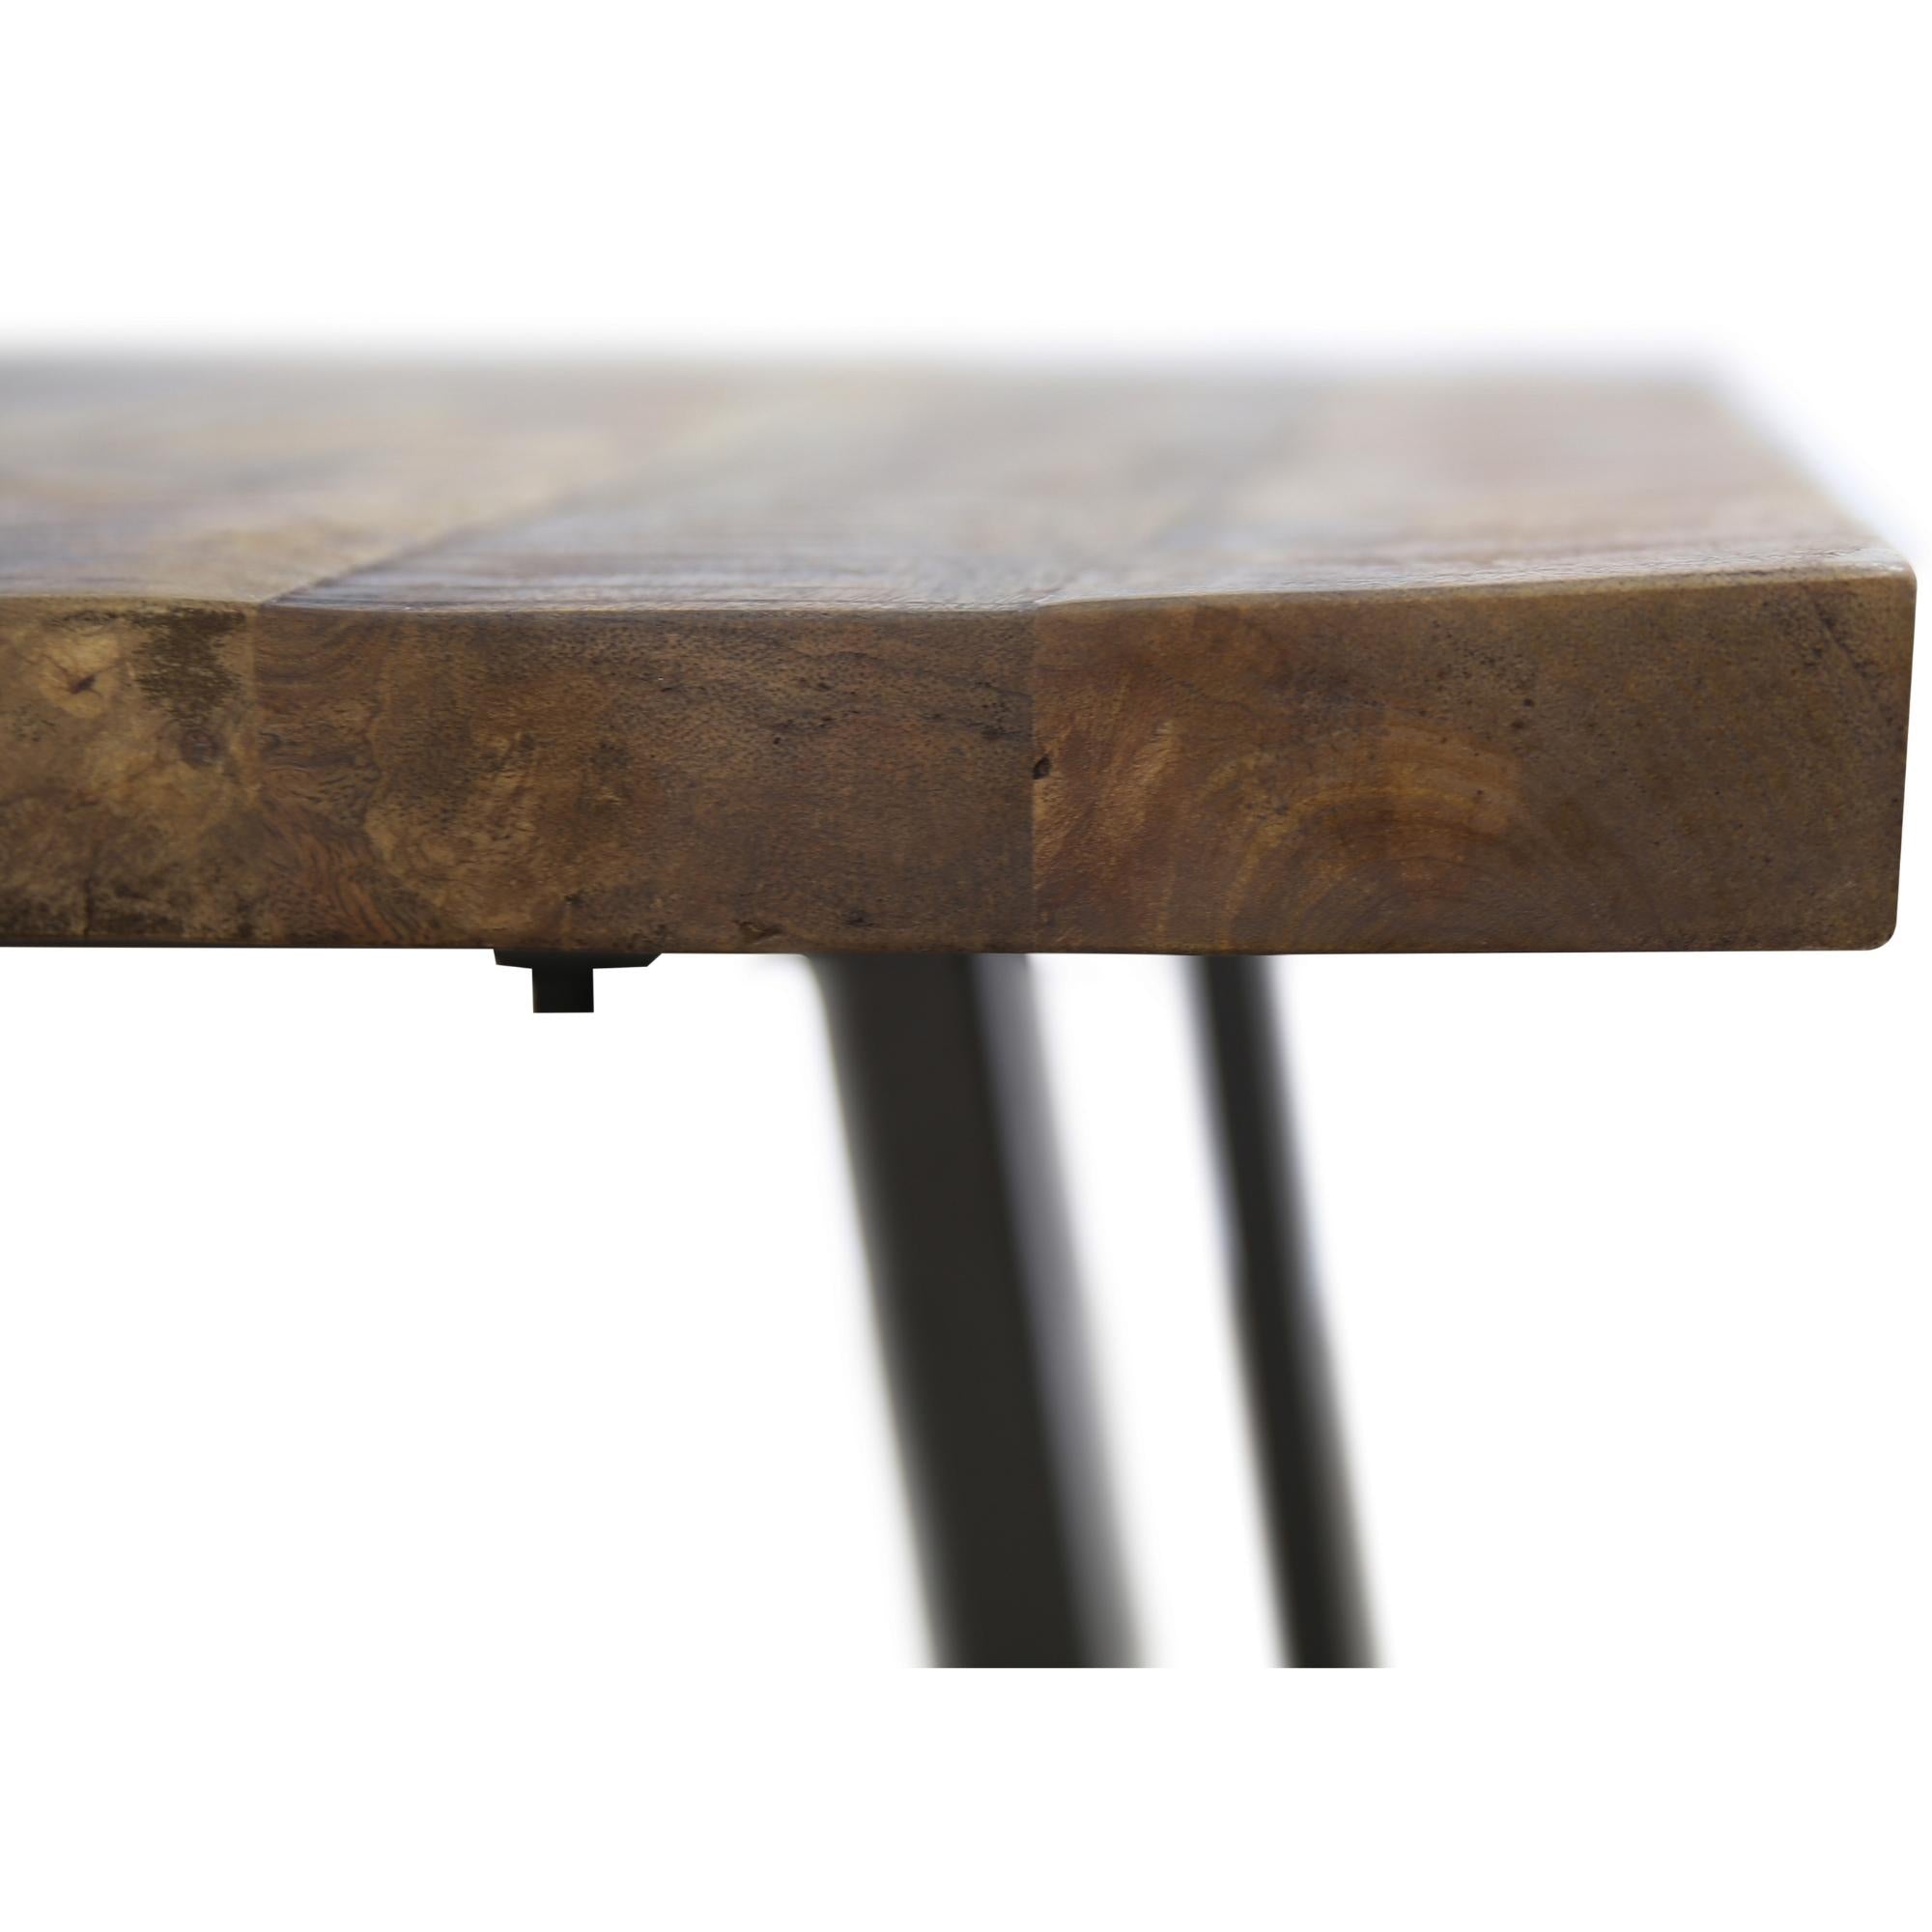 Console Table 140Cm Live Edge Solid Mango Wood Unique Furniture -Natural